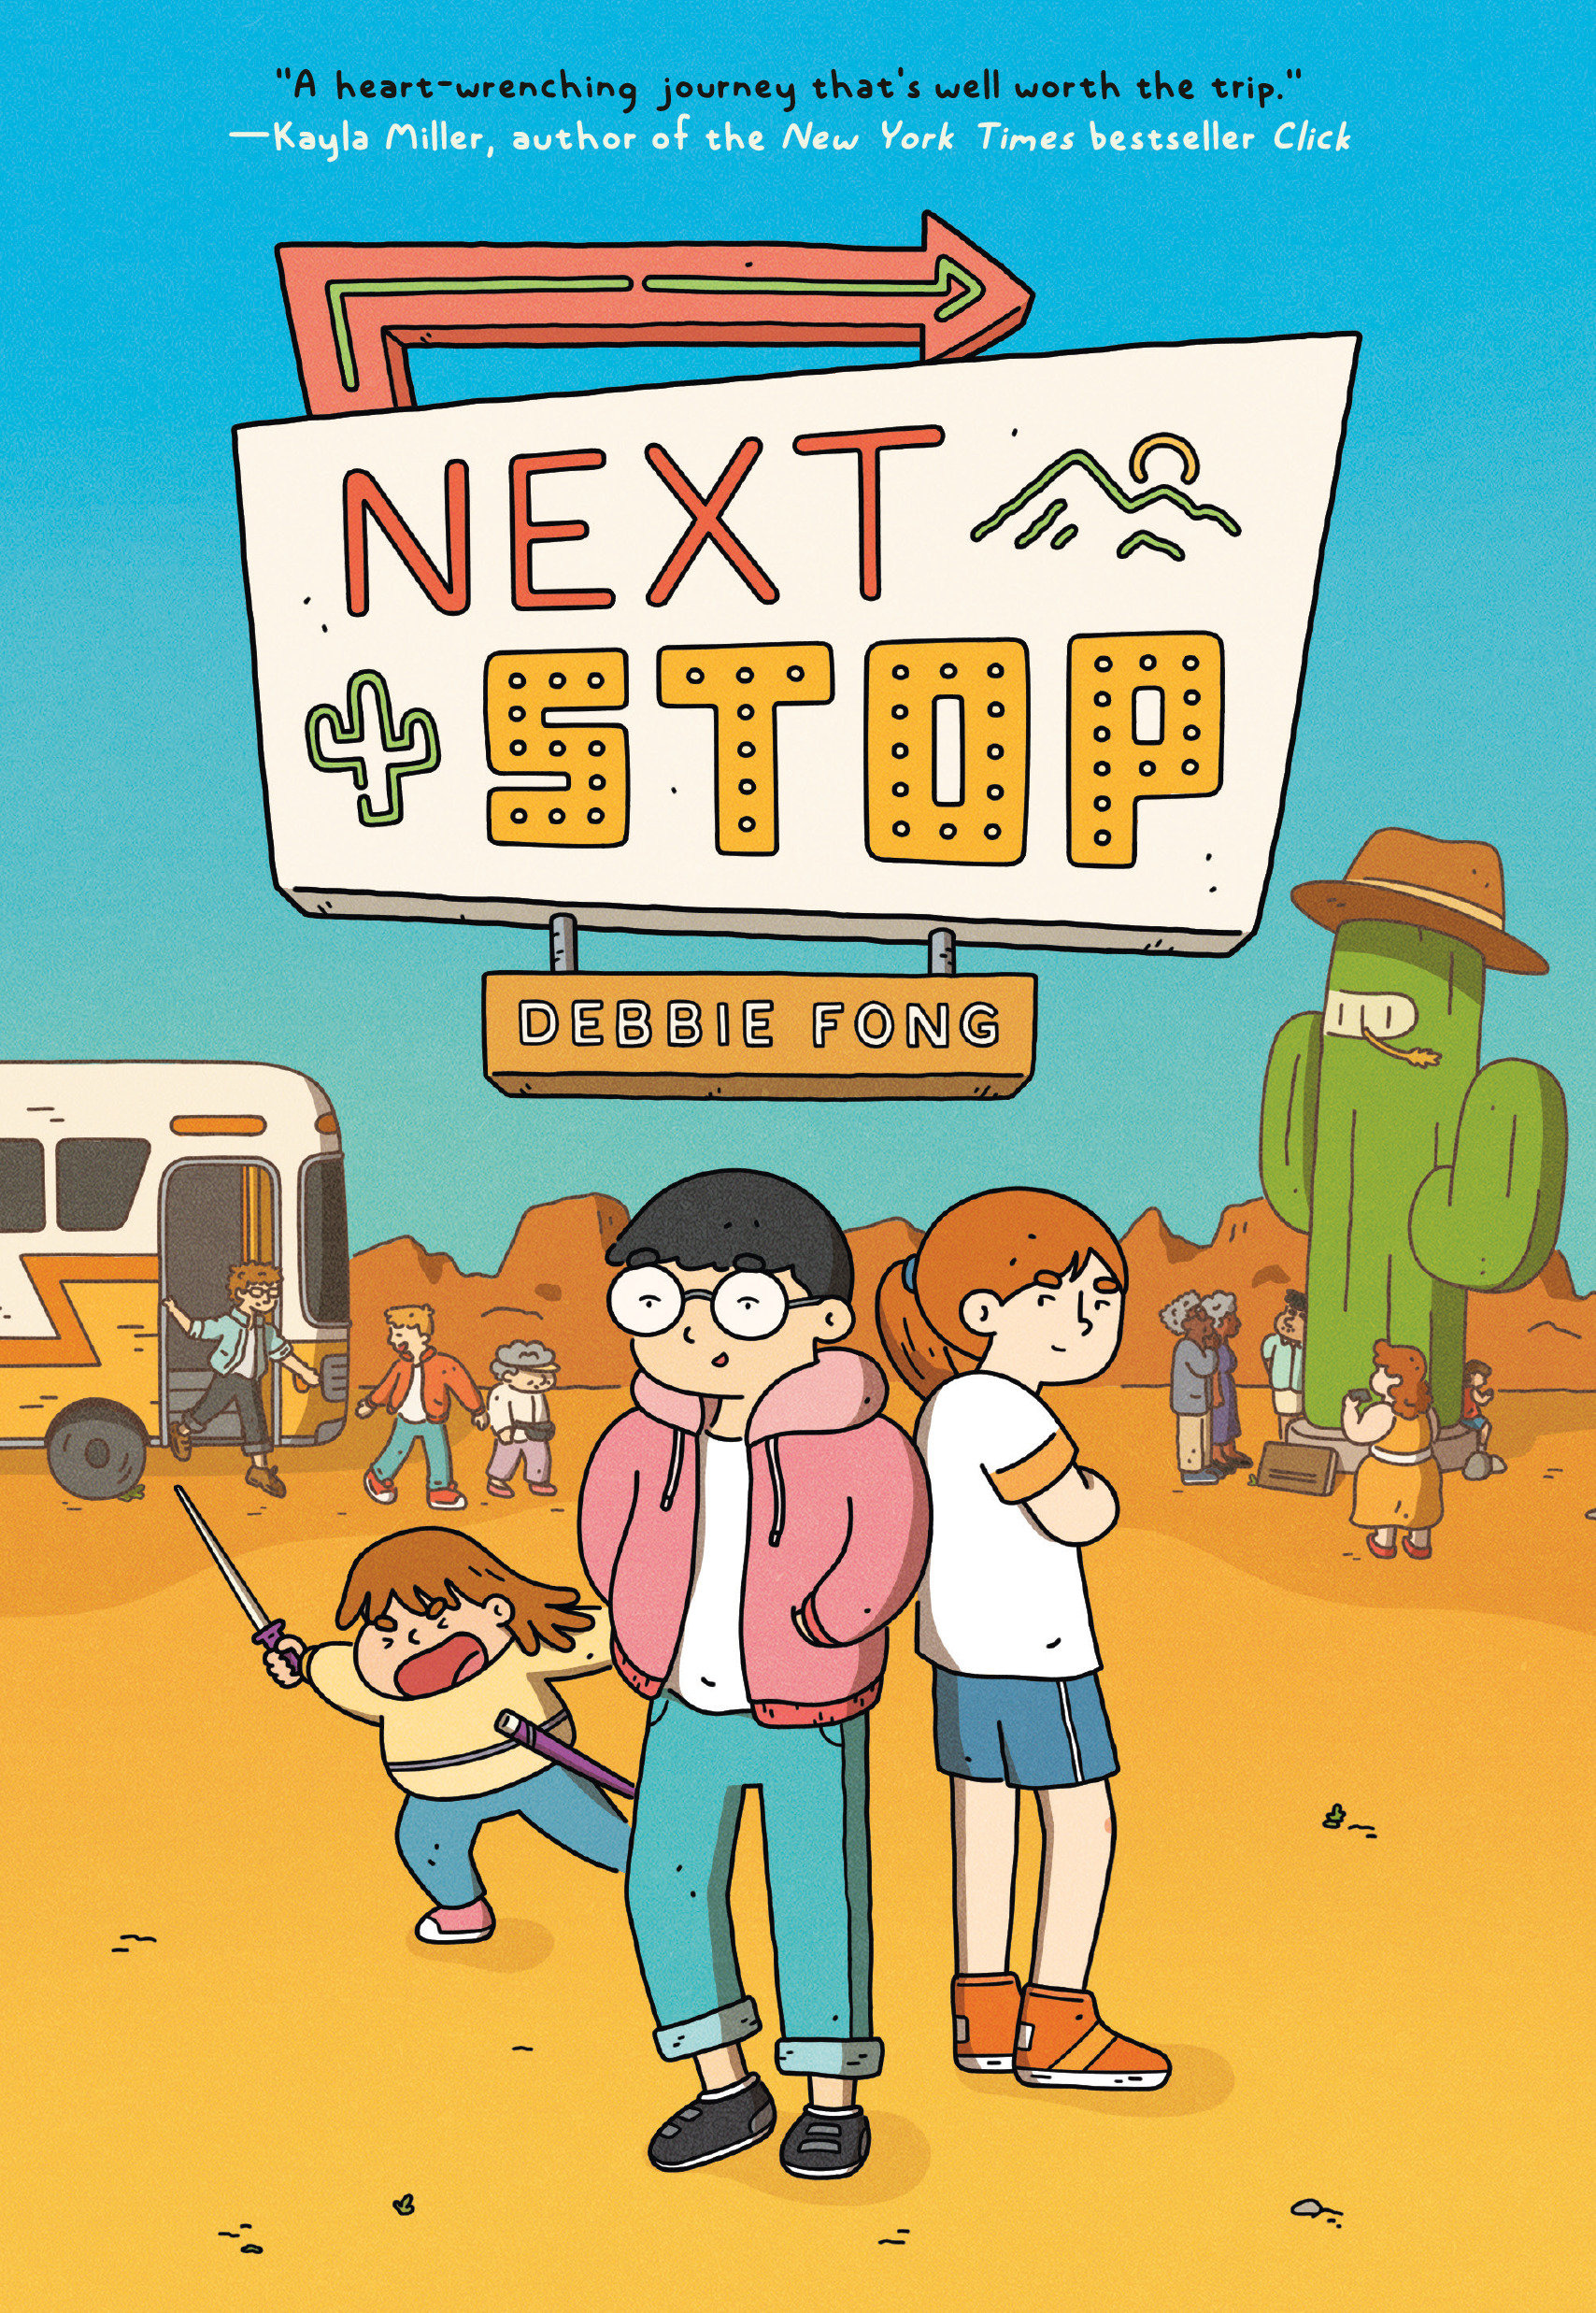 Next Stop Graphic Novel